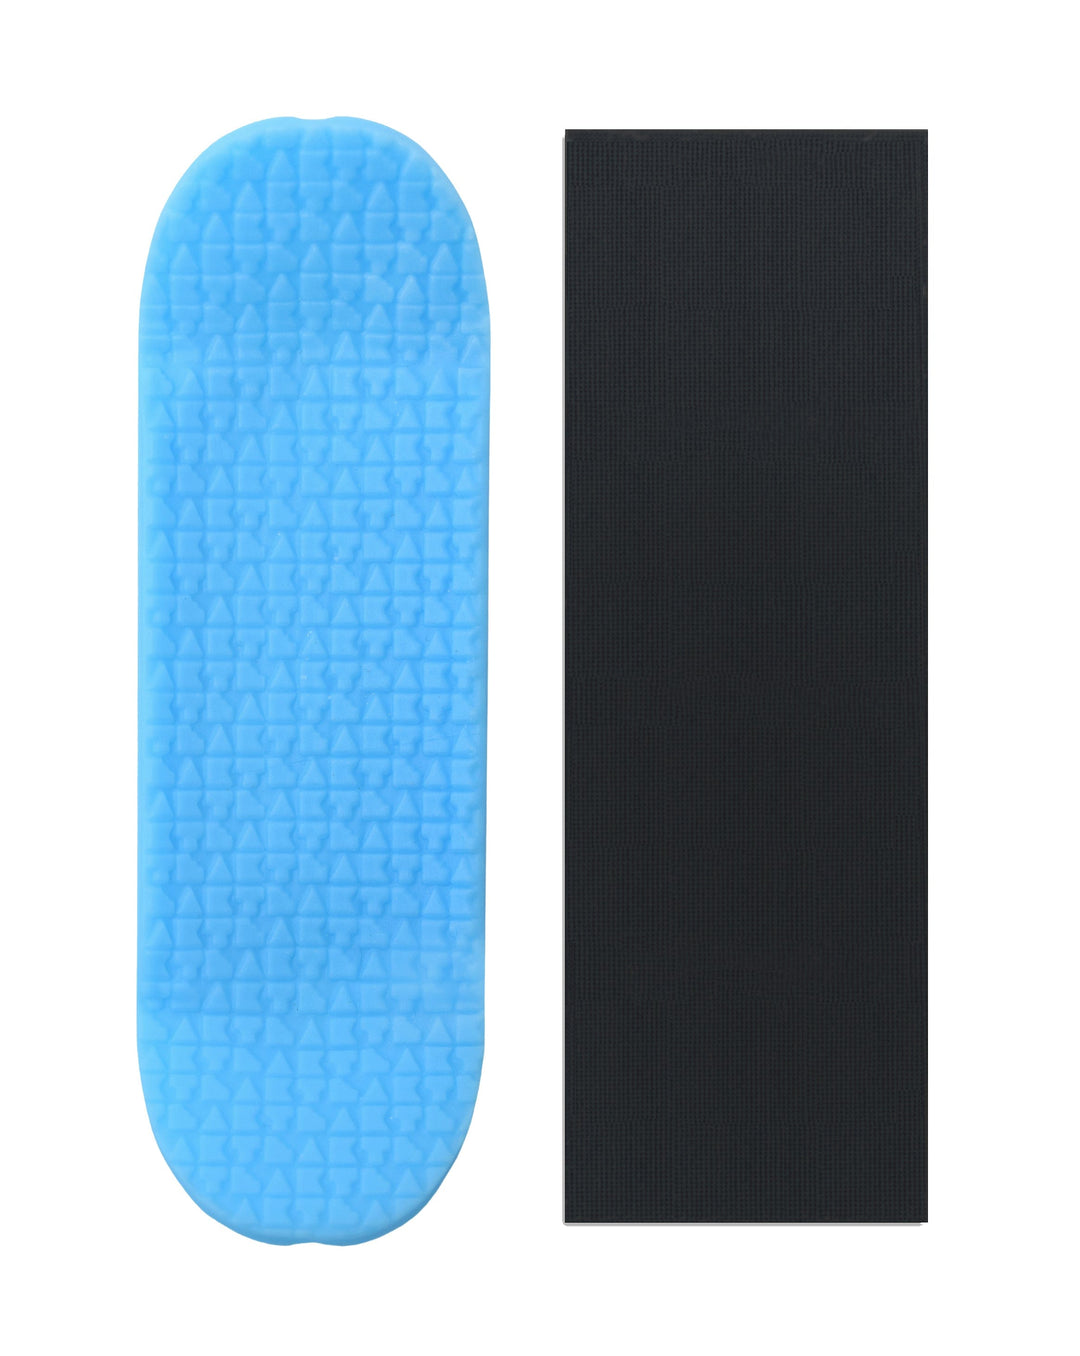 Teak Tuning Finger Snow Skate PRO - 98 x 32MM - Upgraded, Resin Construction - Light Blue Colorway